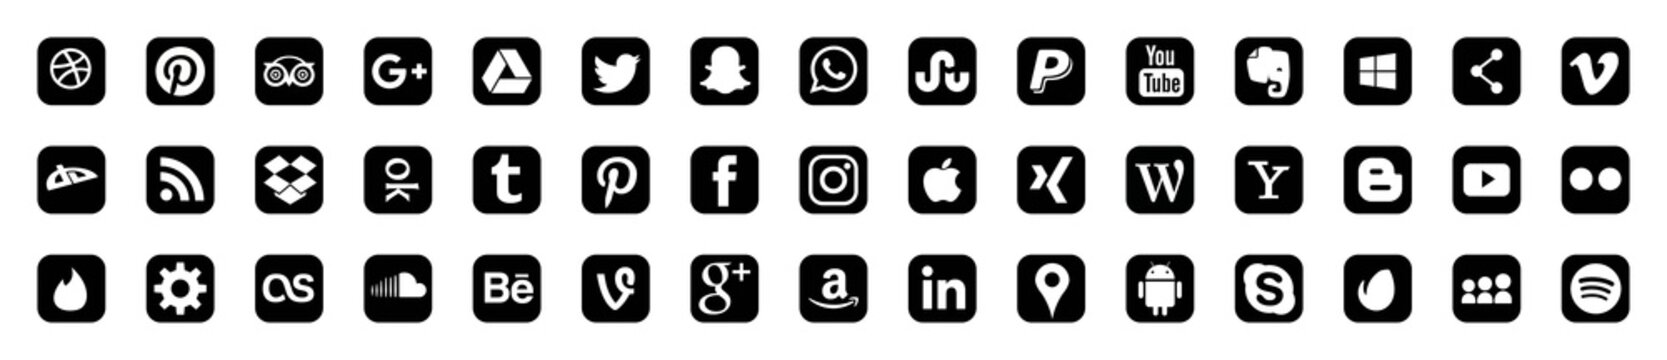 Set of popular social media logos: Instagram, Facebook, Twitter, Youtube, WhatsApp, LinkedIn, Pinterest, Blogger and others